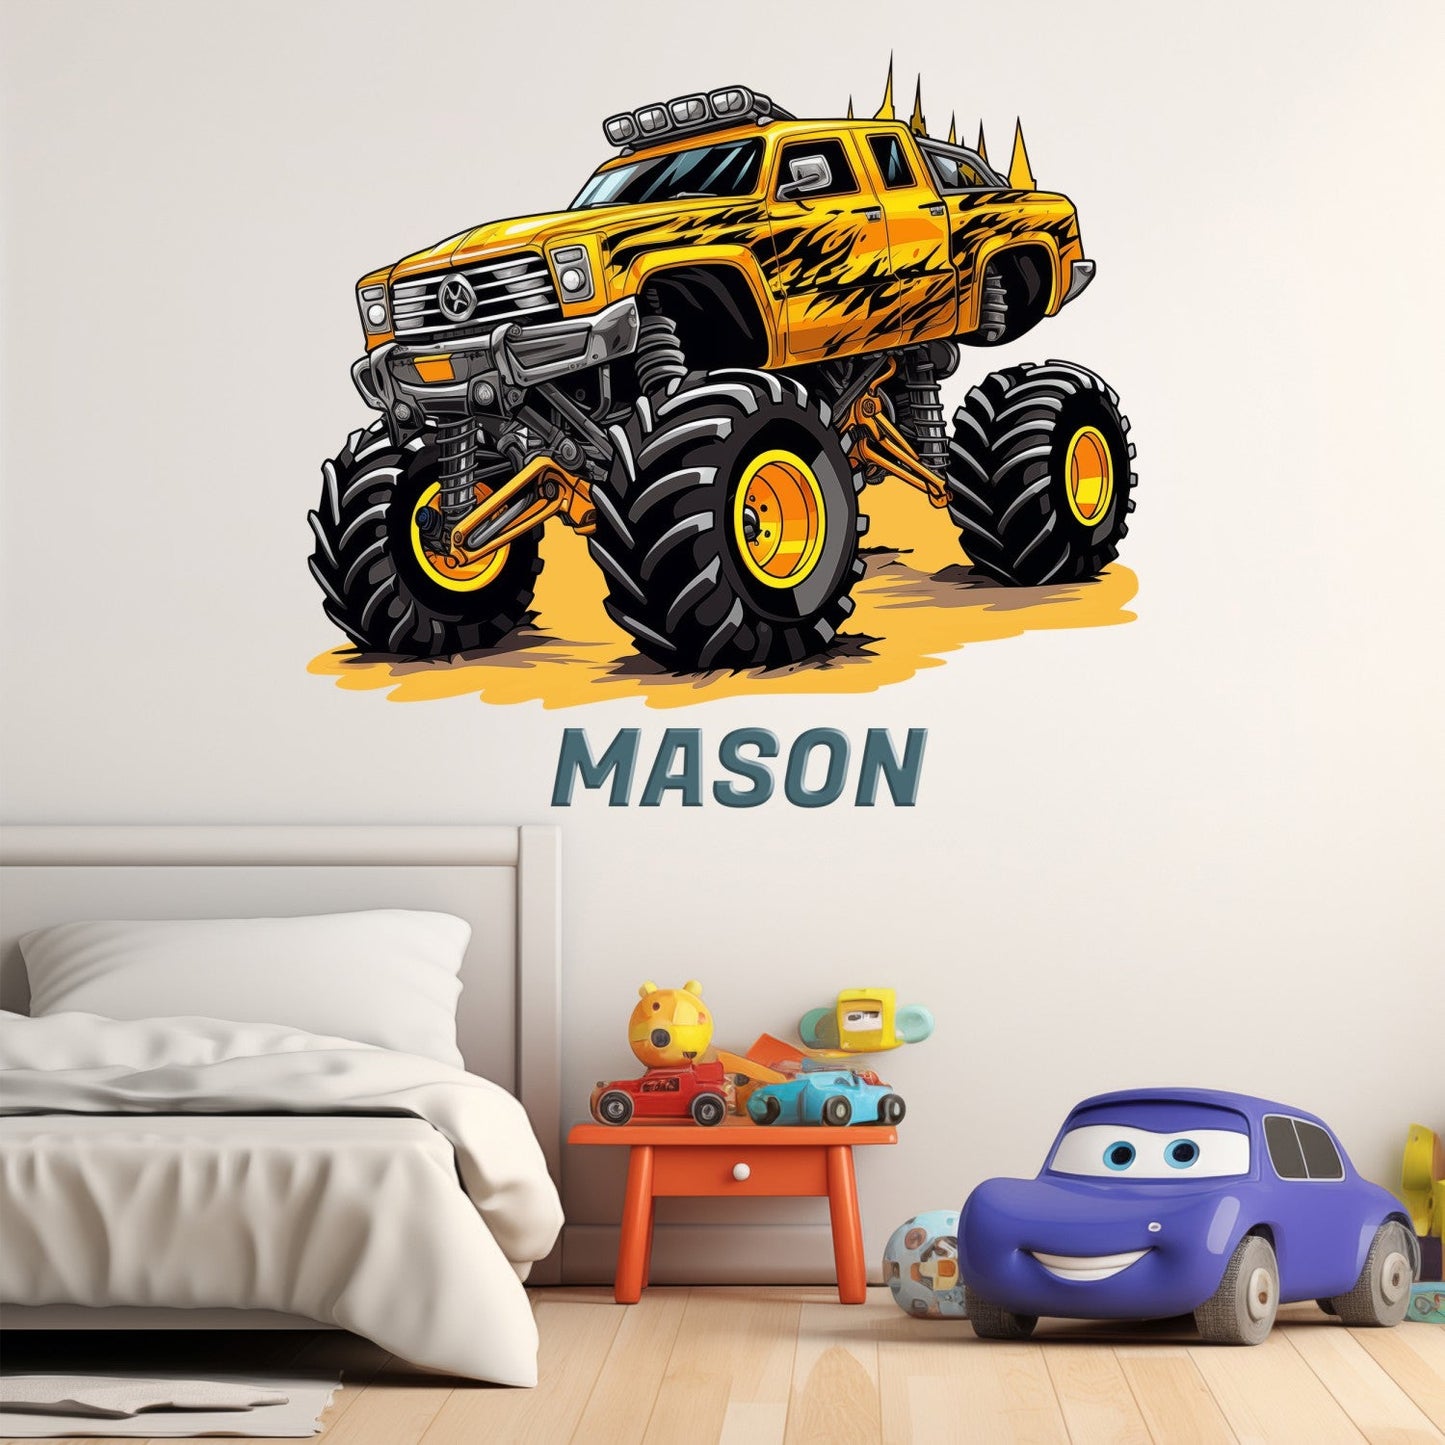 Monster Truck Decals for Wall - Monster Truck Vinyl Decal - Colorfull Monster Truck Wall Decal  - Large Monster Truck Wall Stickers